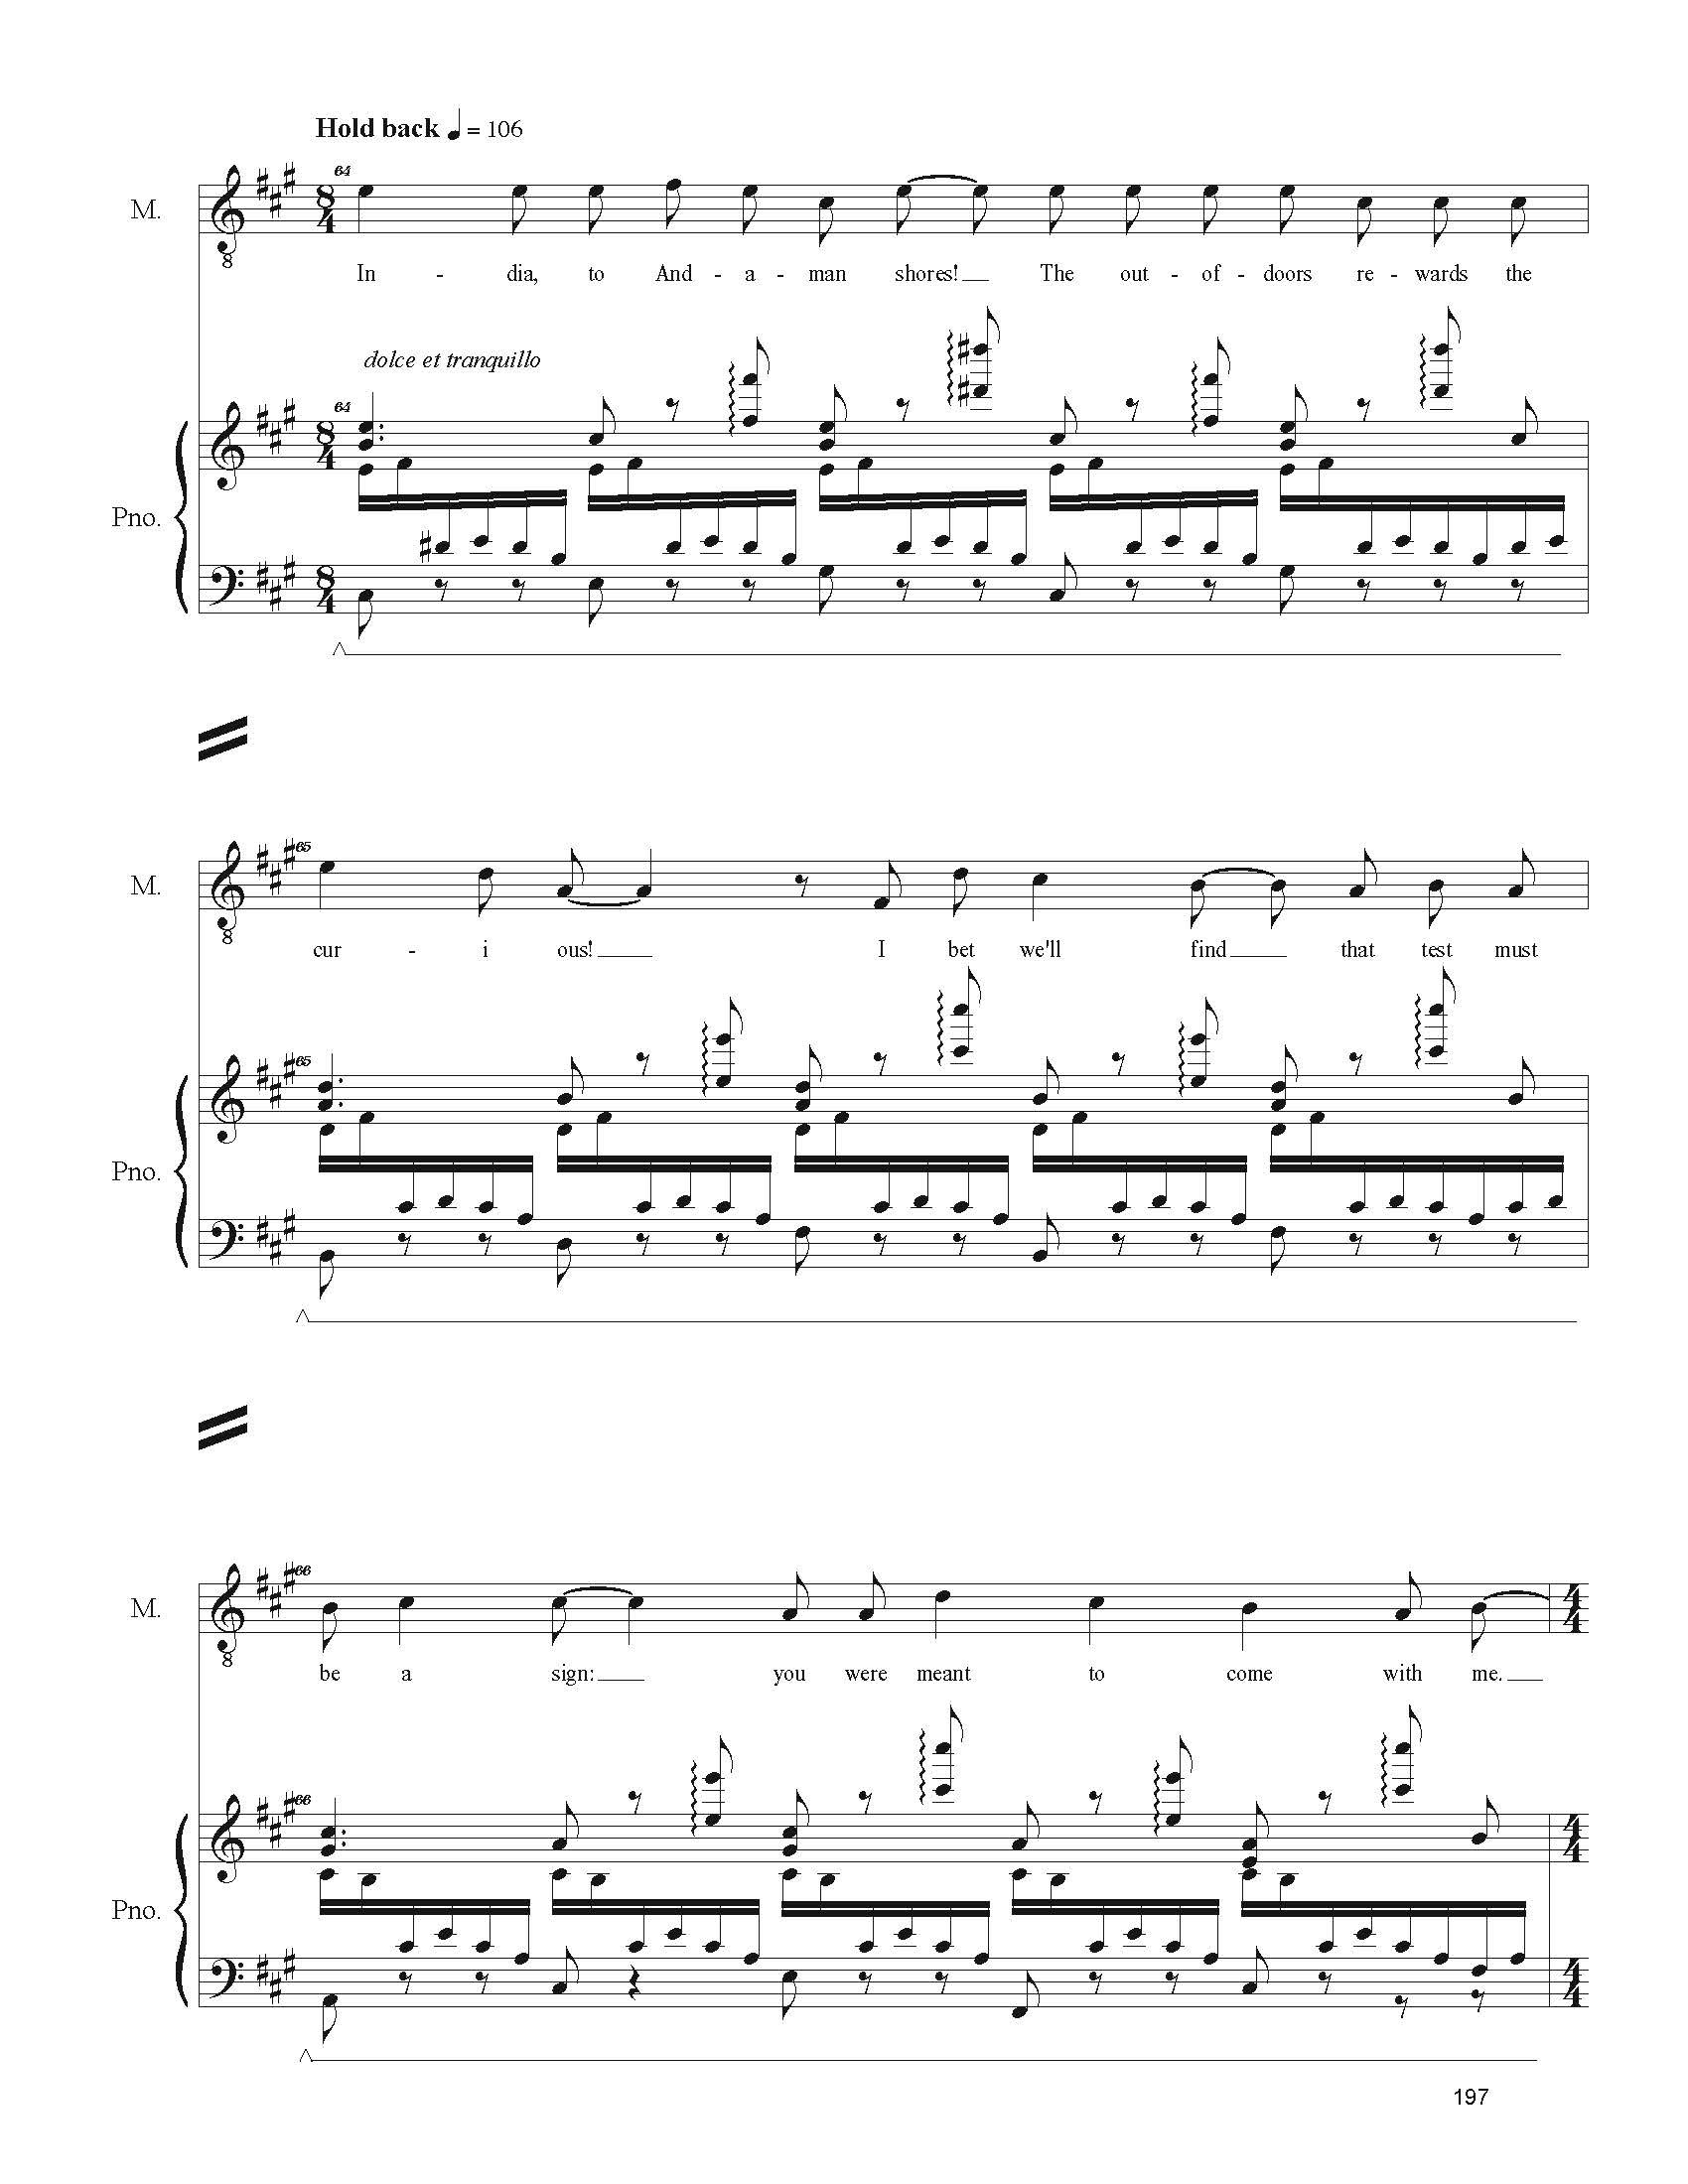 FULL PIANO VOCAL SCORE DRAFT 1 - Score_Page_197.jpg